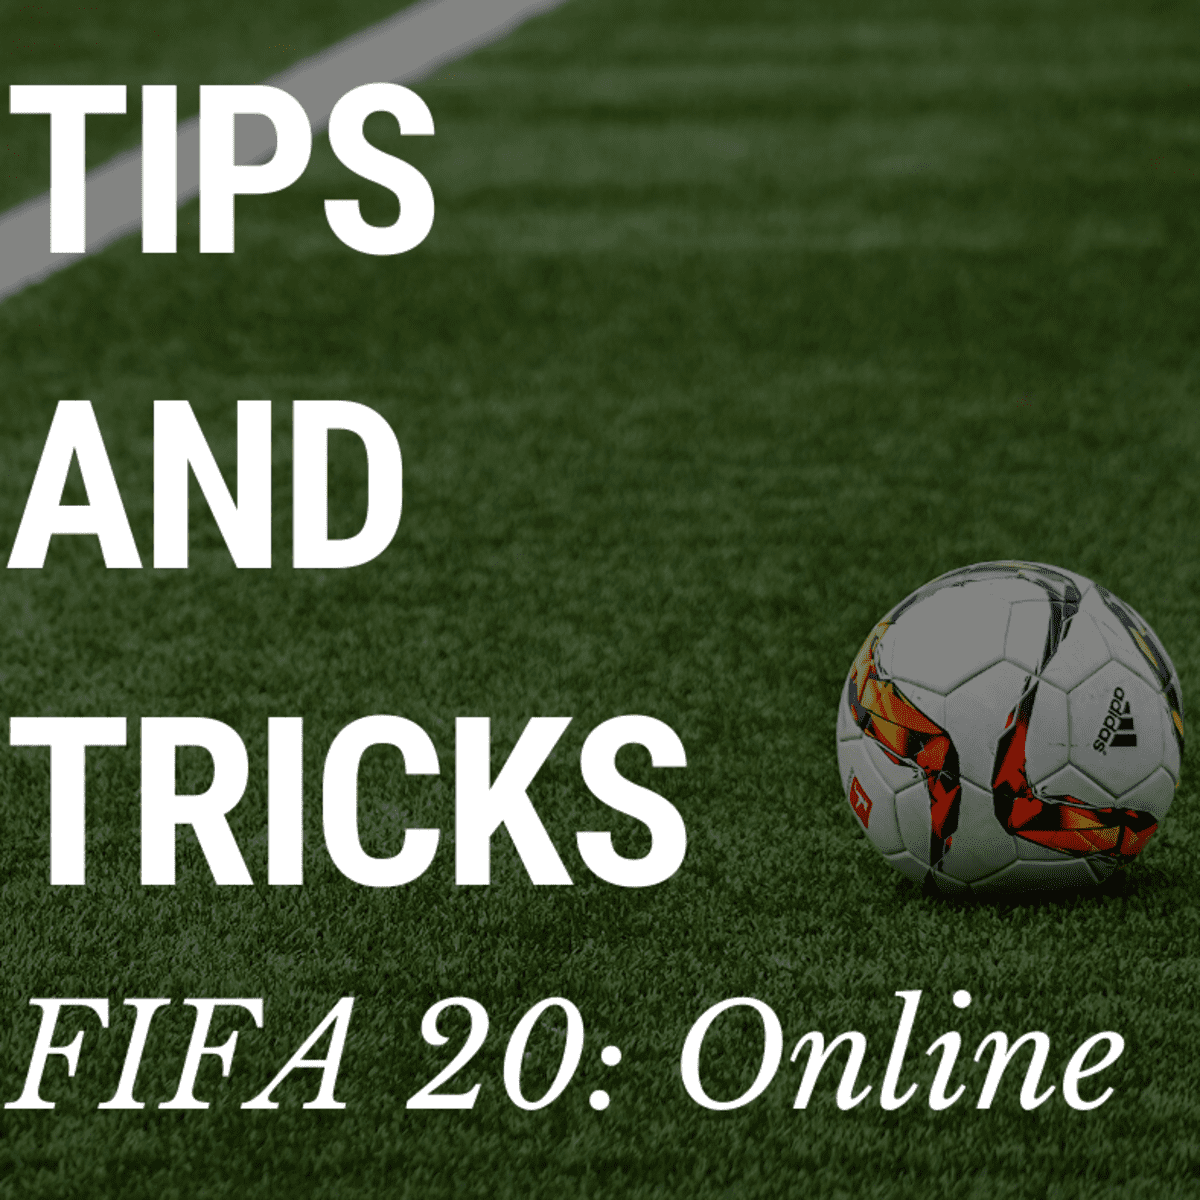 Soccer Stars: Football Kick Tips, Cheats, Vidoes and Strategies